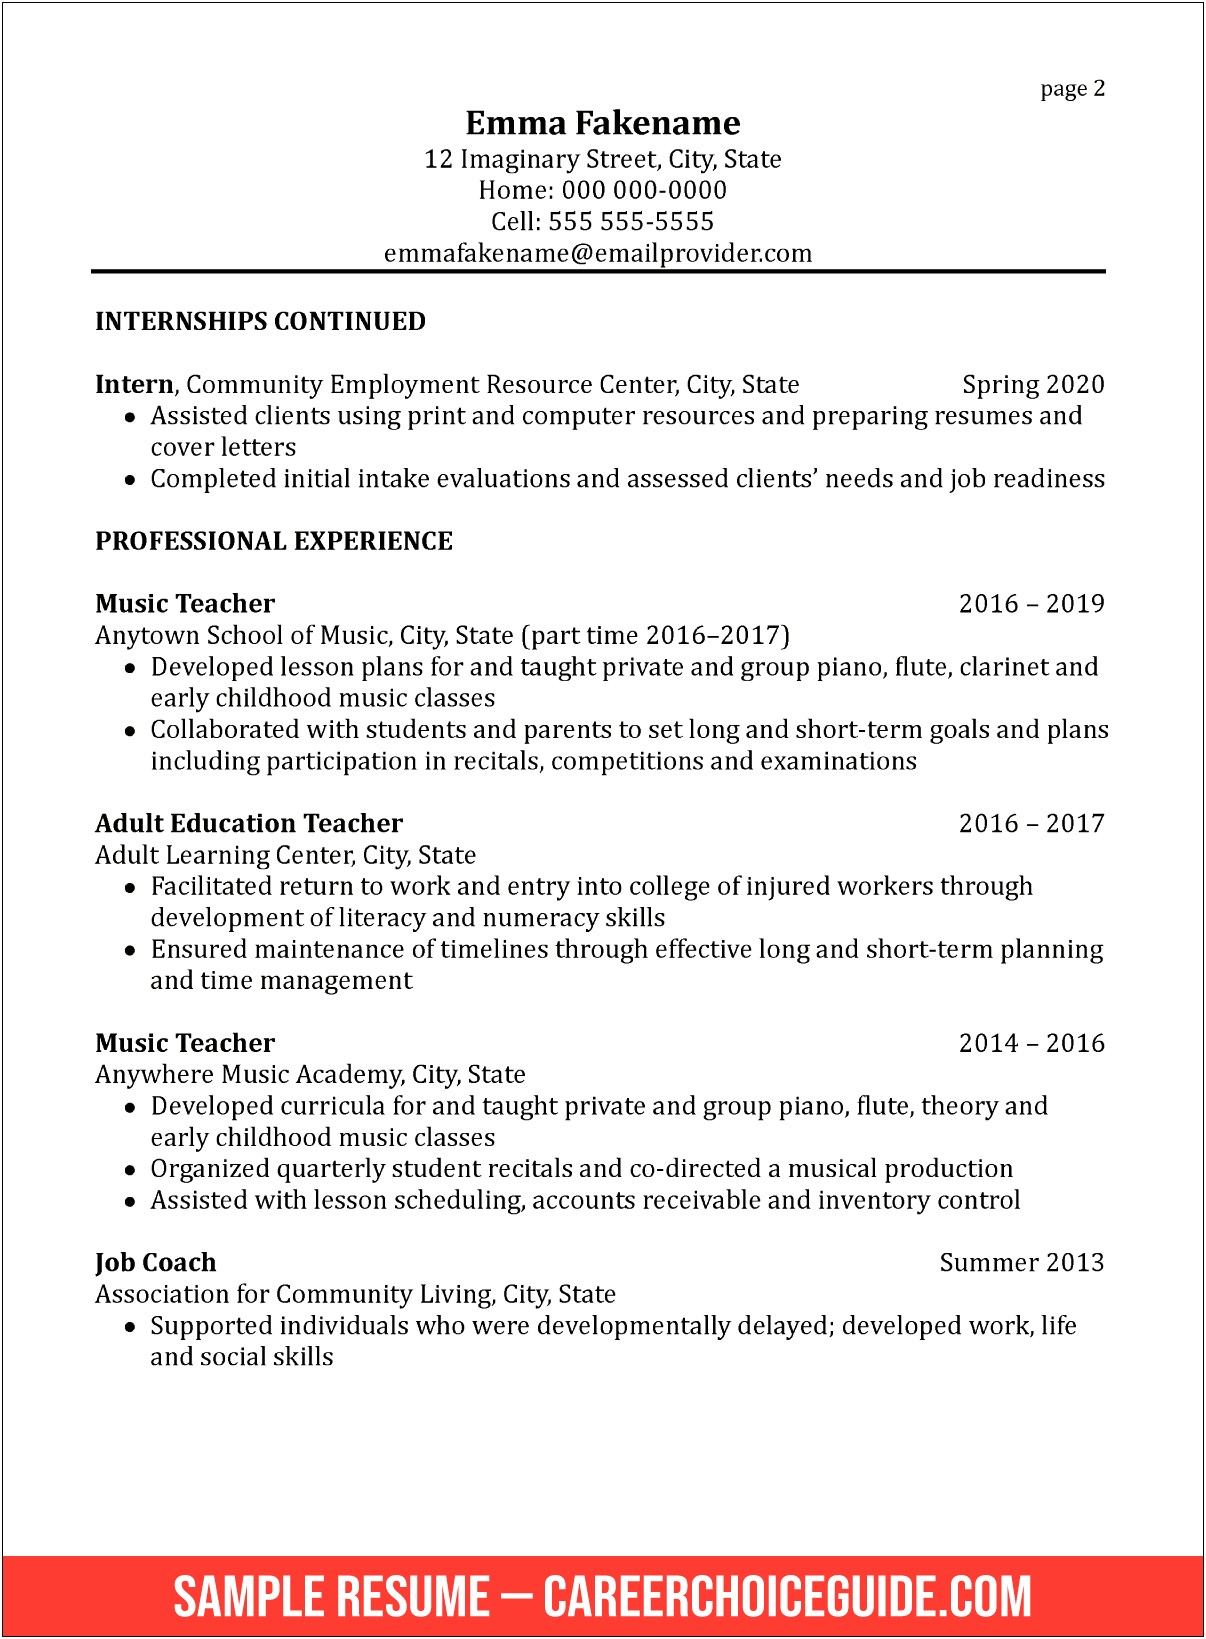 Resume Samples For Career Transition